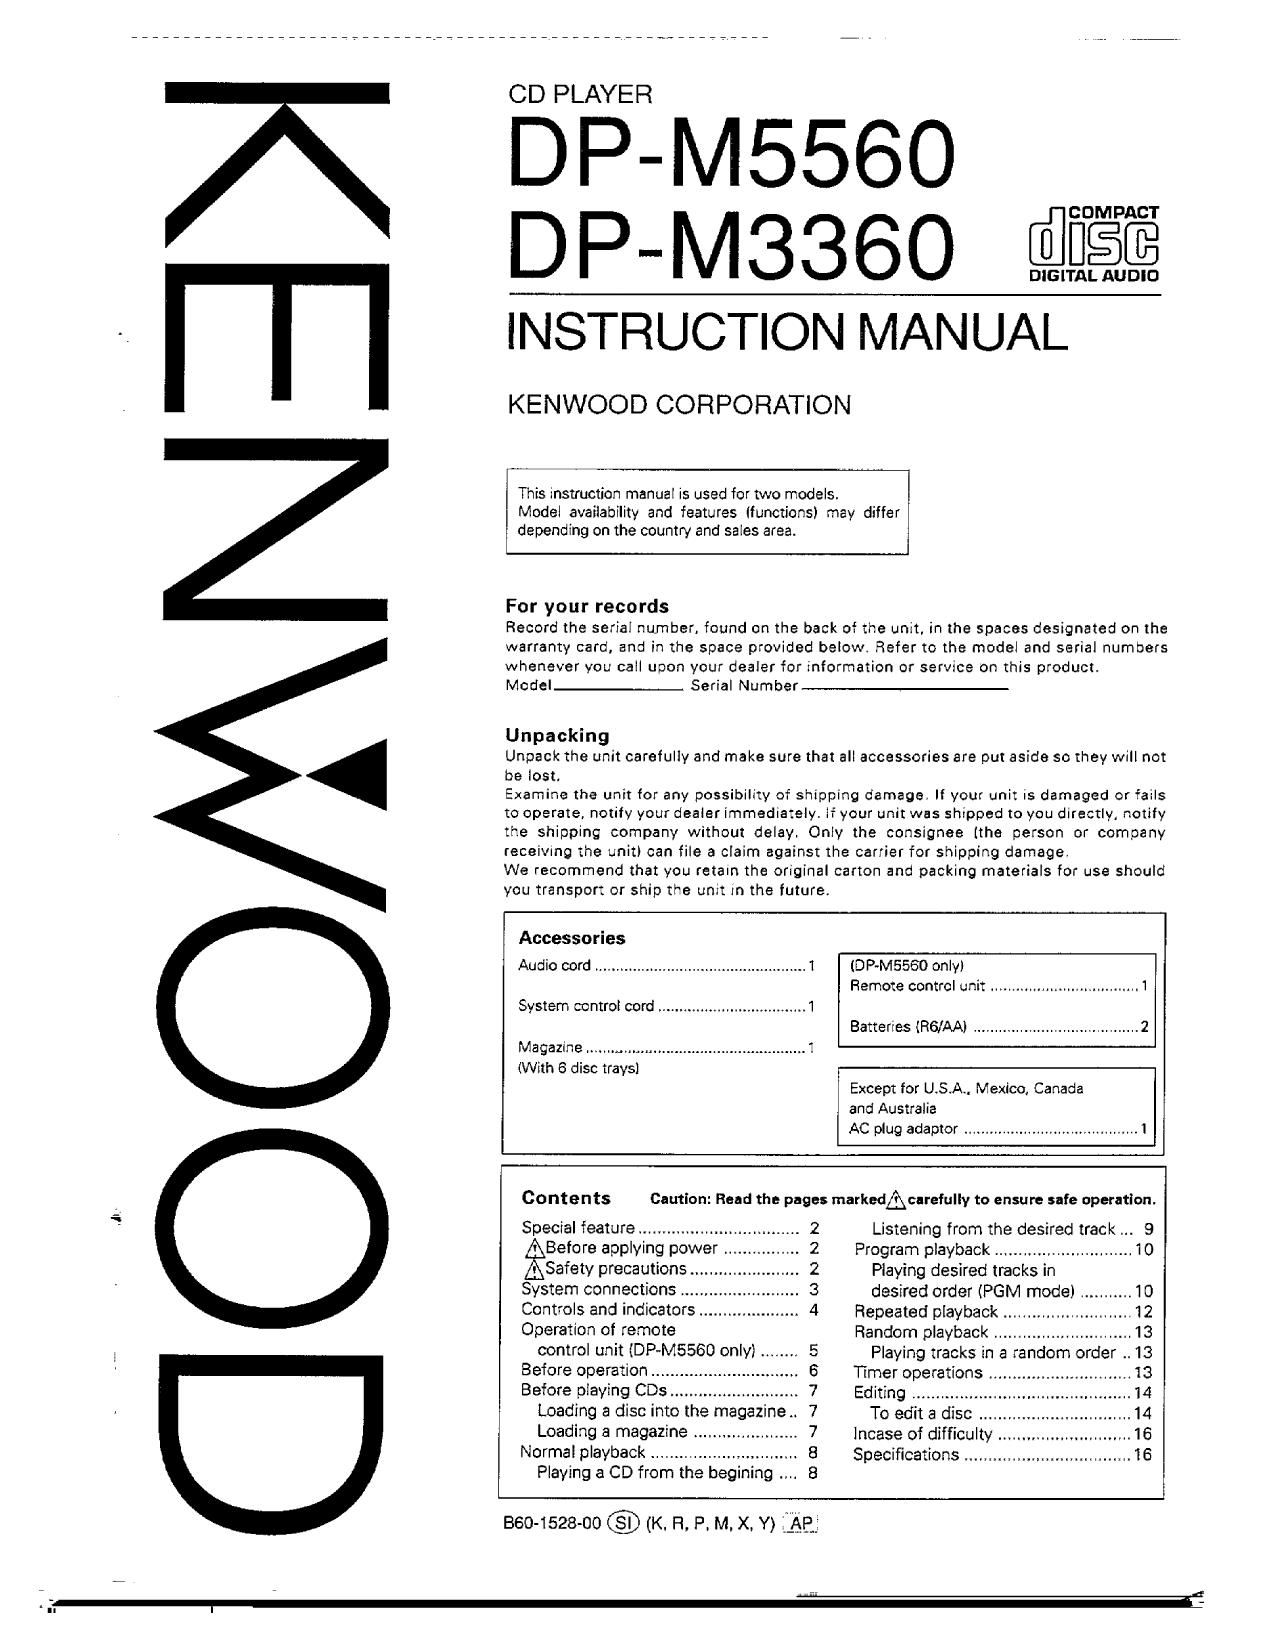 Kenwood DPM 5560 Owners Manual